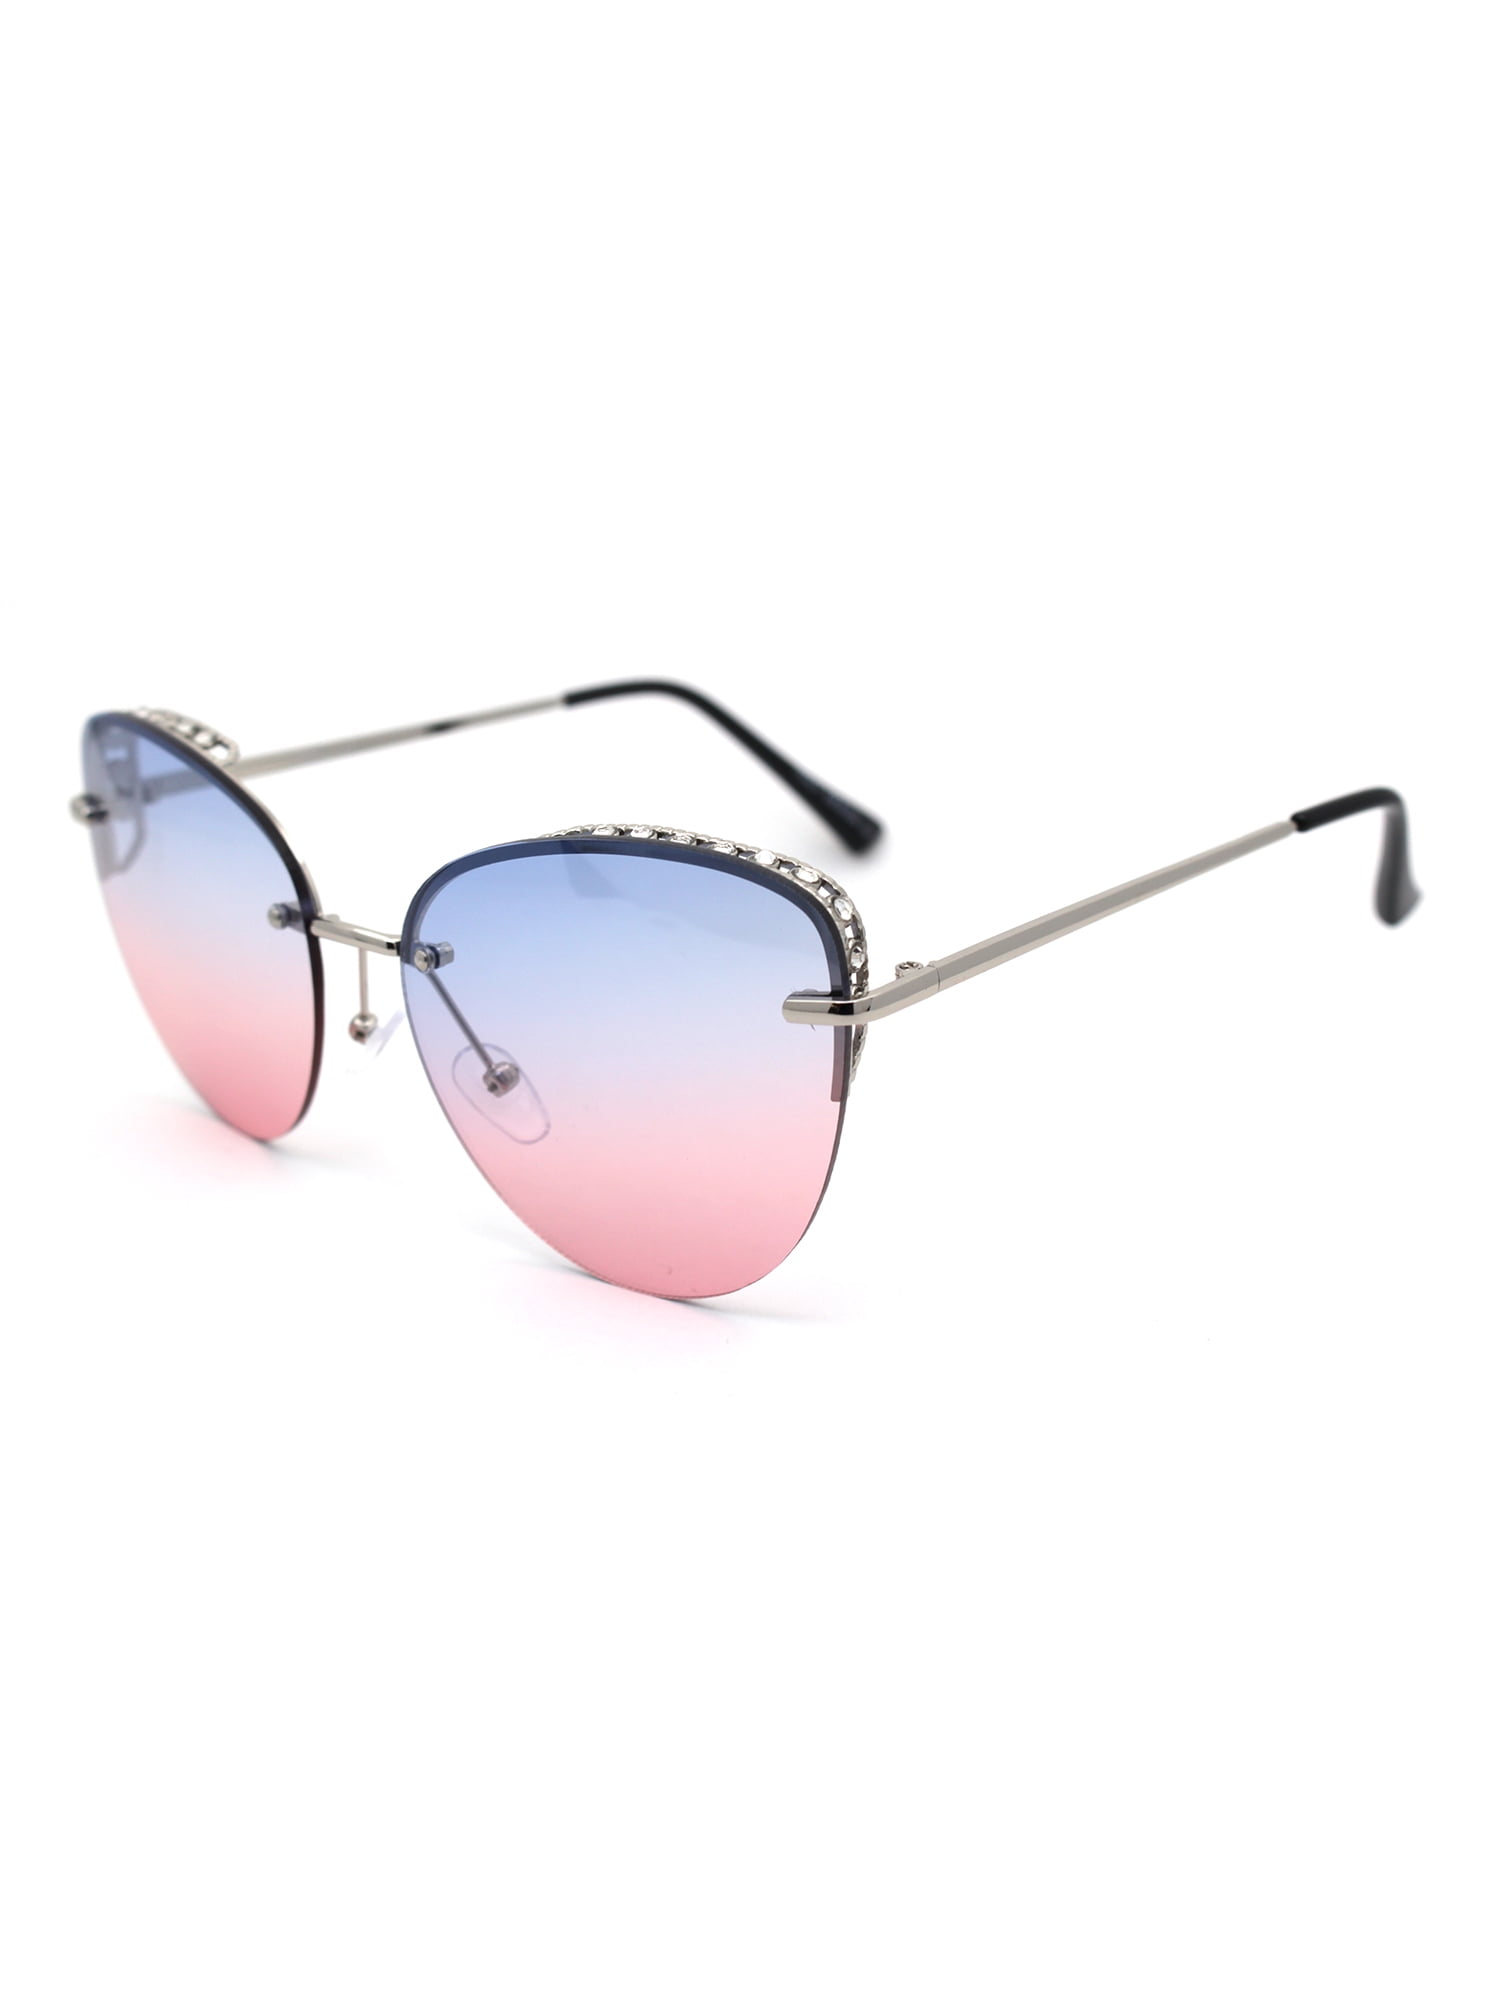 Womens Rhinestone Edge Jewel Rimless Cat Eye Sunglasses Silver Blue Pink 